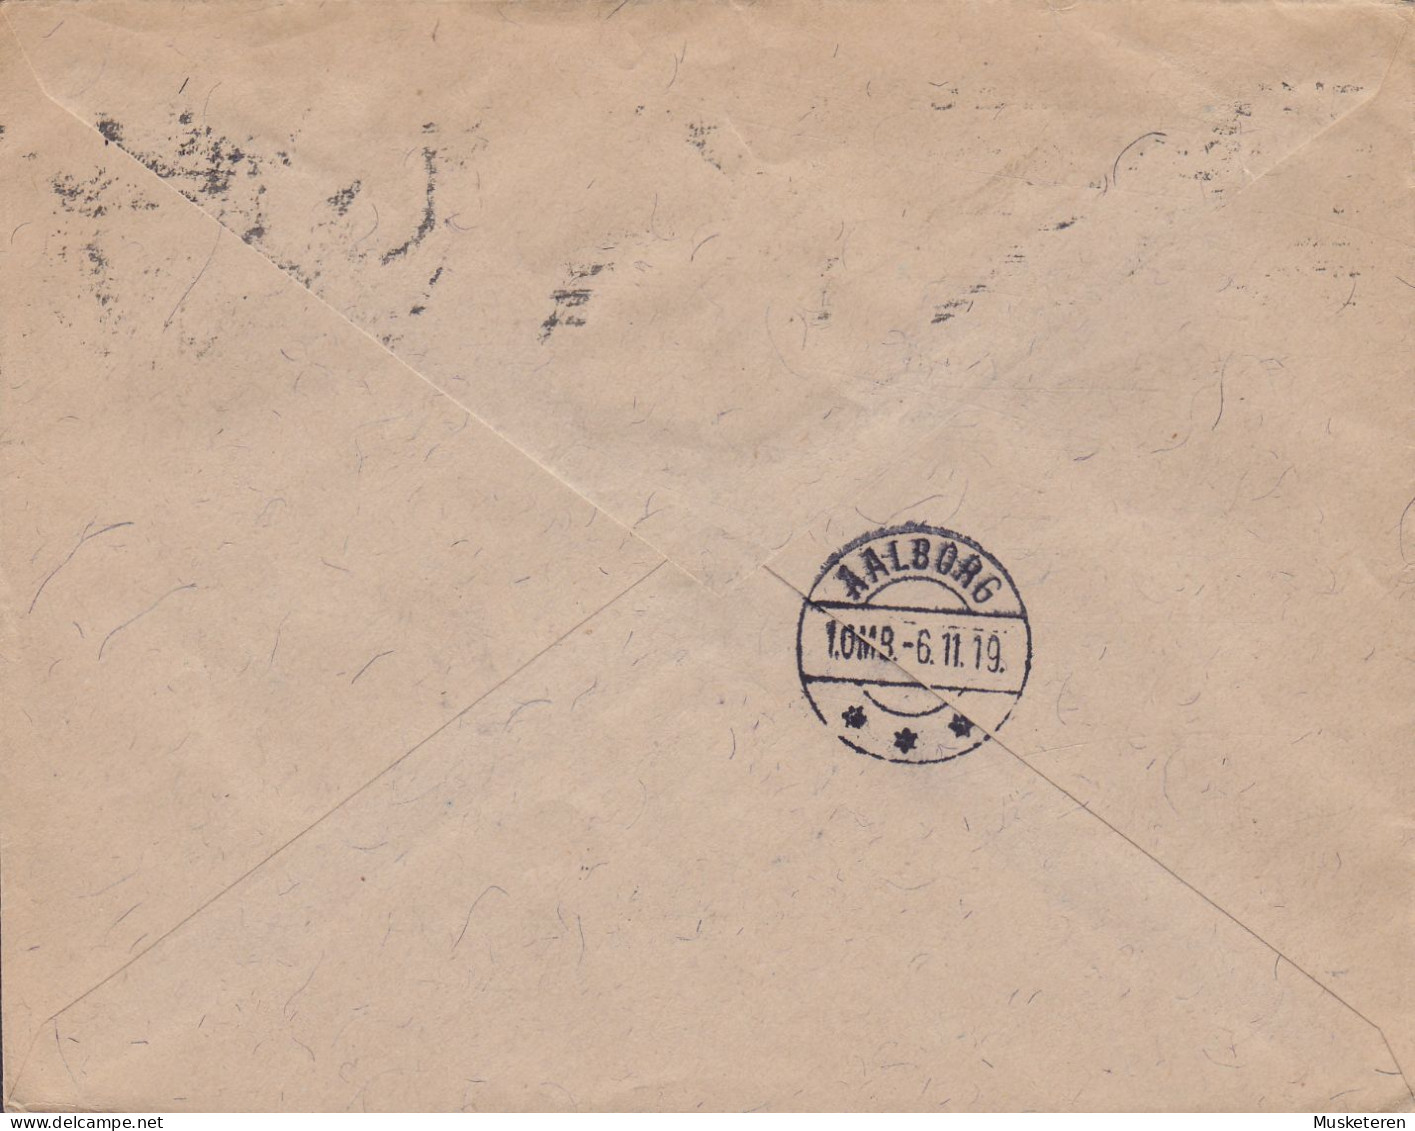 Finland J. ELMGREN & Co. Spedition, HELSINGFORS 1919 Cover Brief Lettre Brotype AALBORG (Arr.) Denmark (2 Scans) - Cartas & Documentos